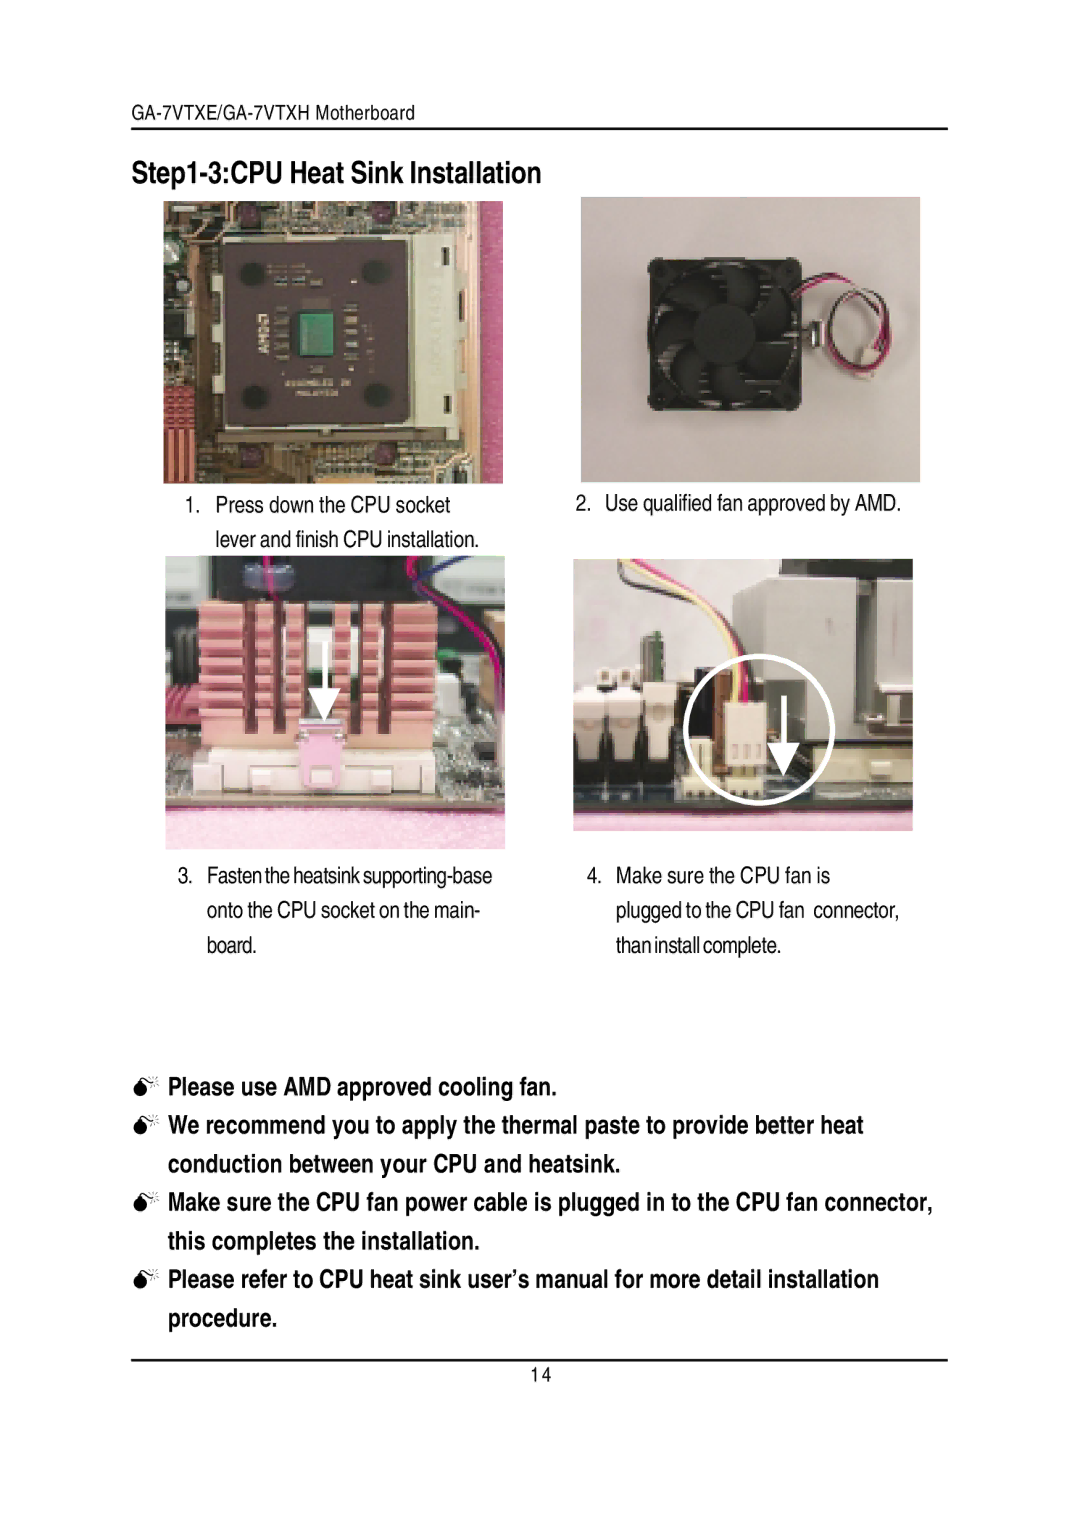 Gigabyte GA-7VTXE, GA-7VTXH warranty 3CPU Heat Sink Installation, Use qualified fan approved by AMD 